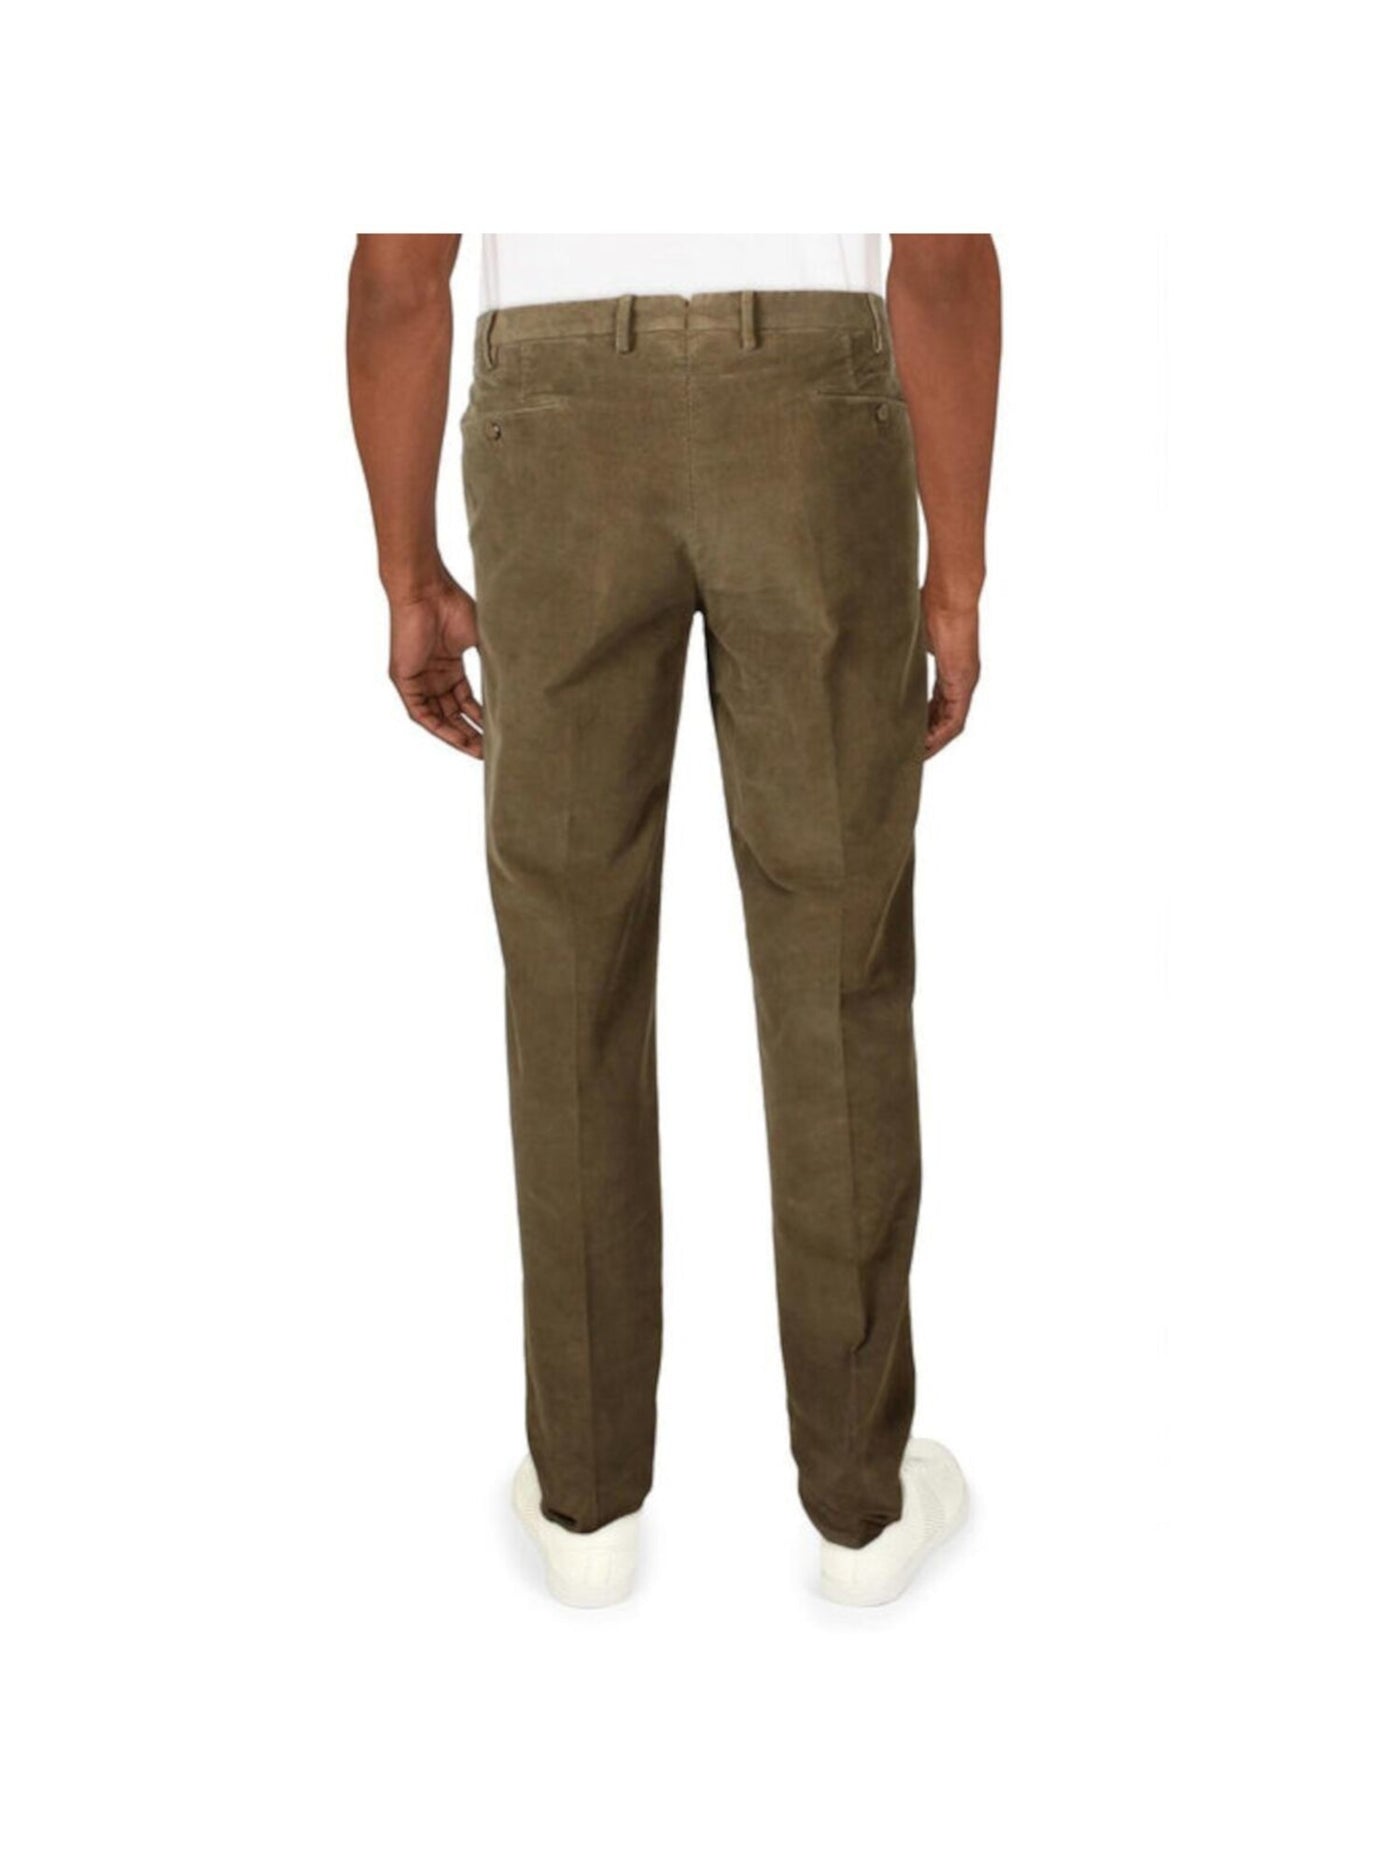 TORIN OPIFICIO Mens Green Flat Front, Stretch, Regular Fit Pants 56